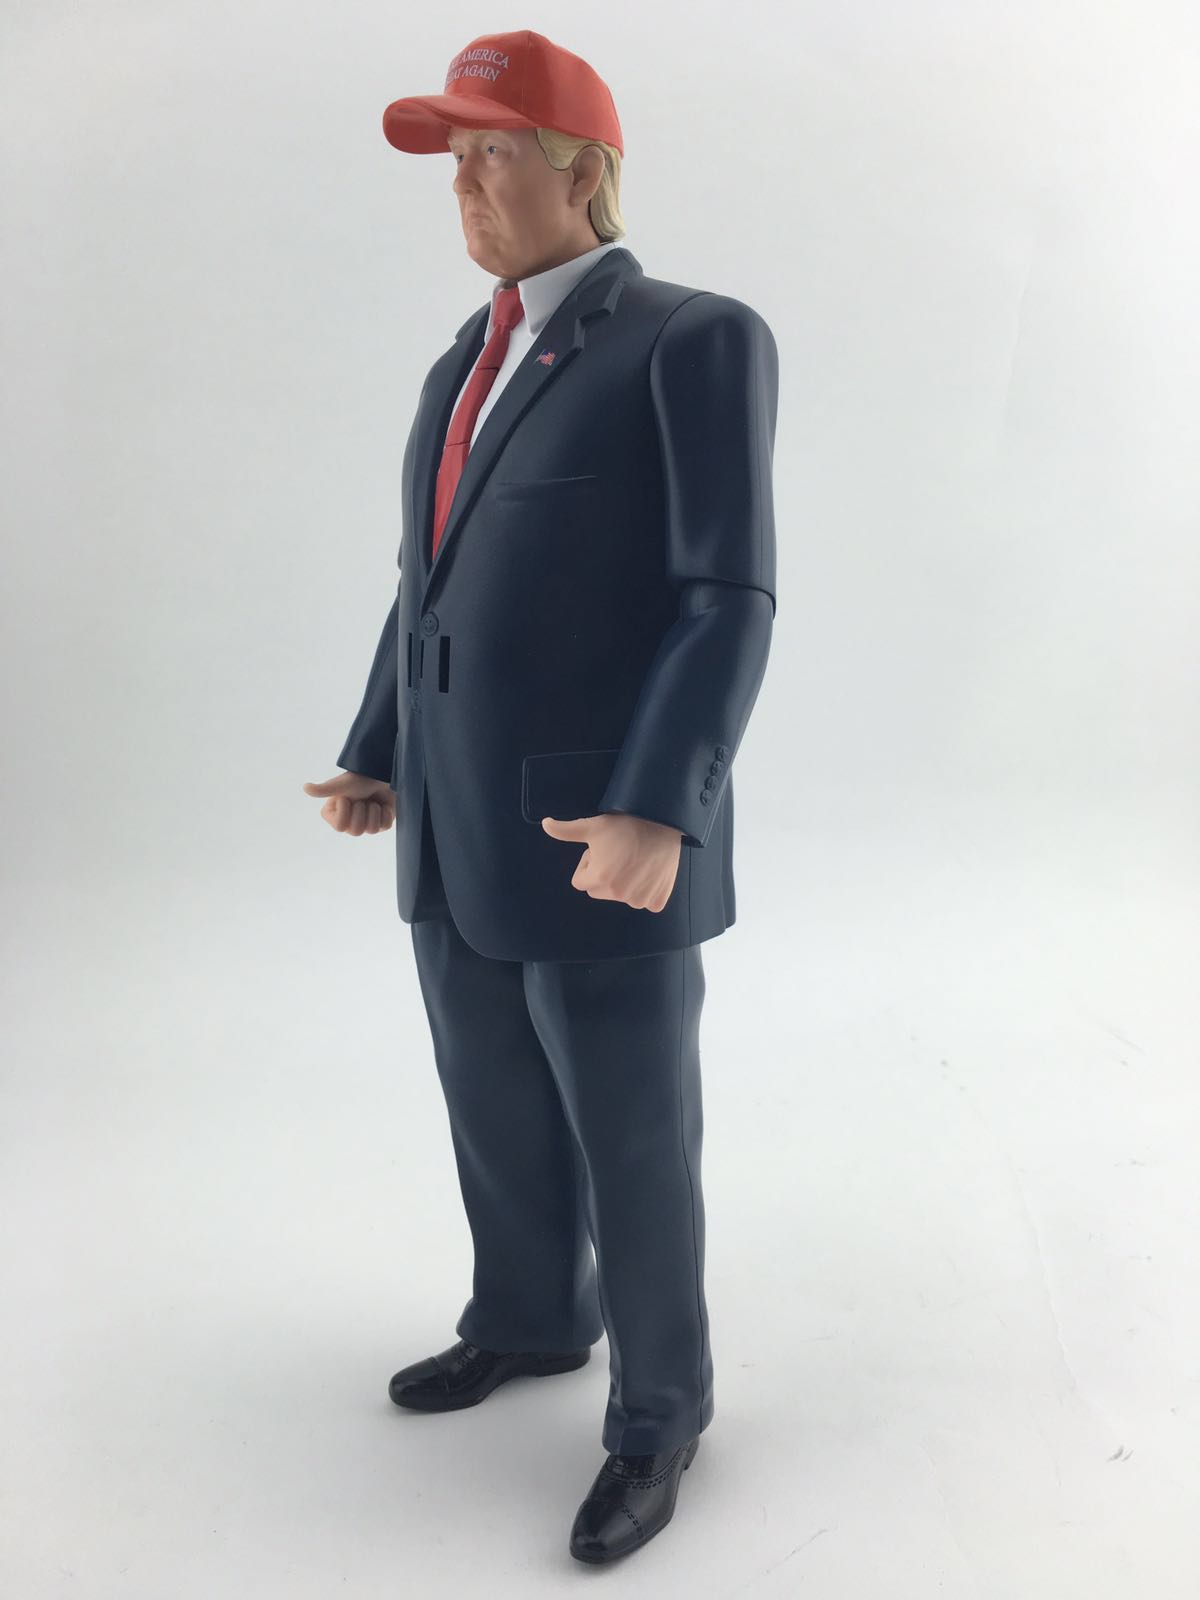 Trump 2016 - Man of Action Figure!